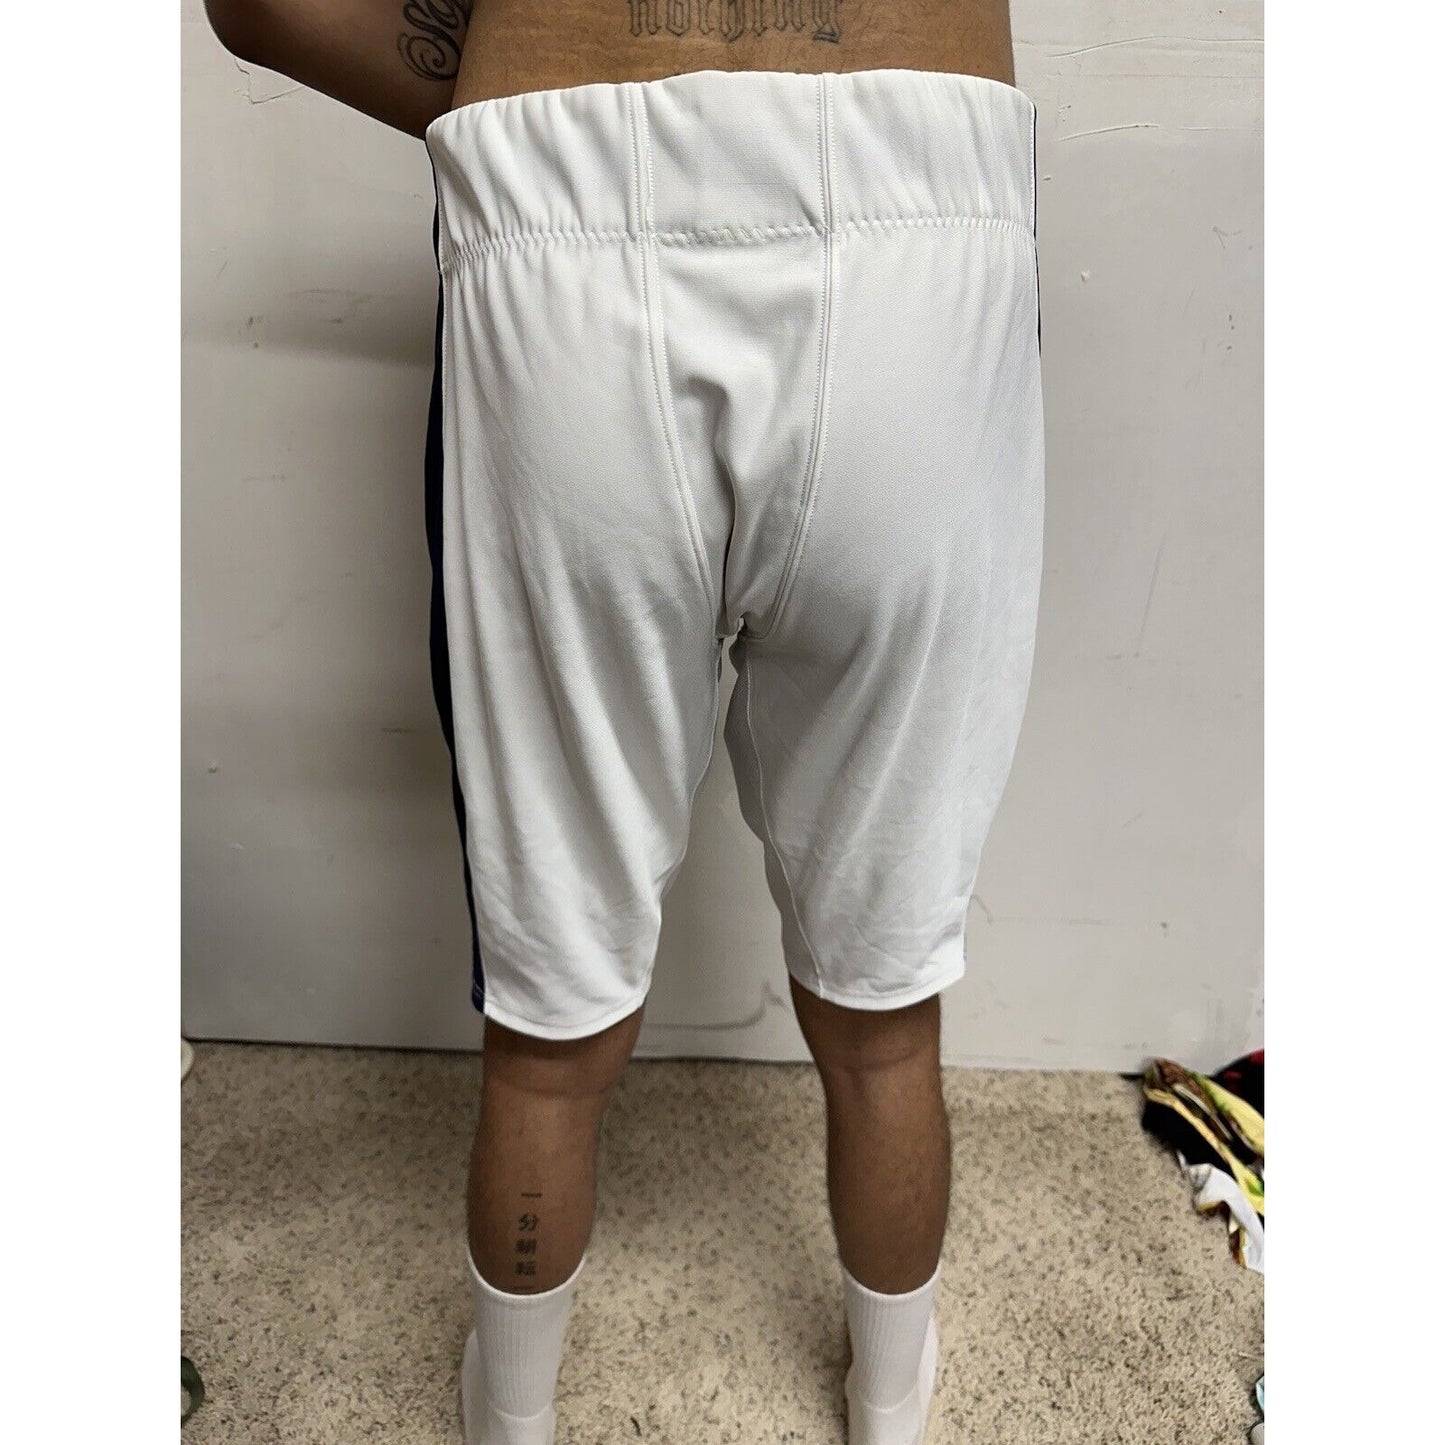 Men’s White Under Armour XL Football Pants